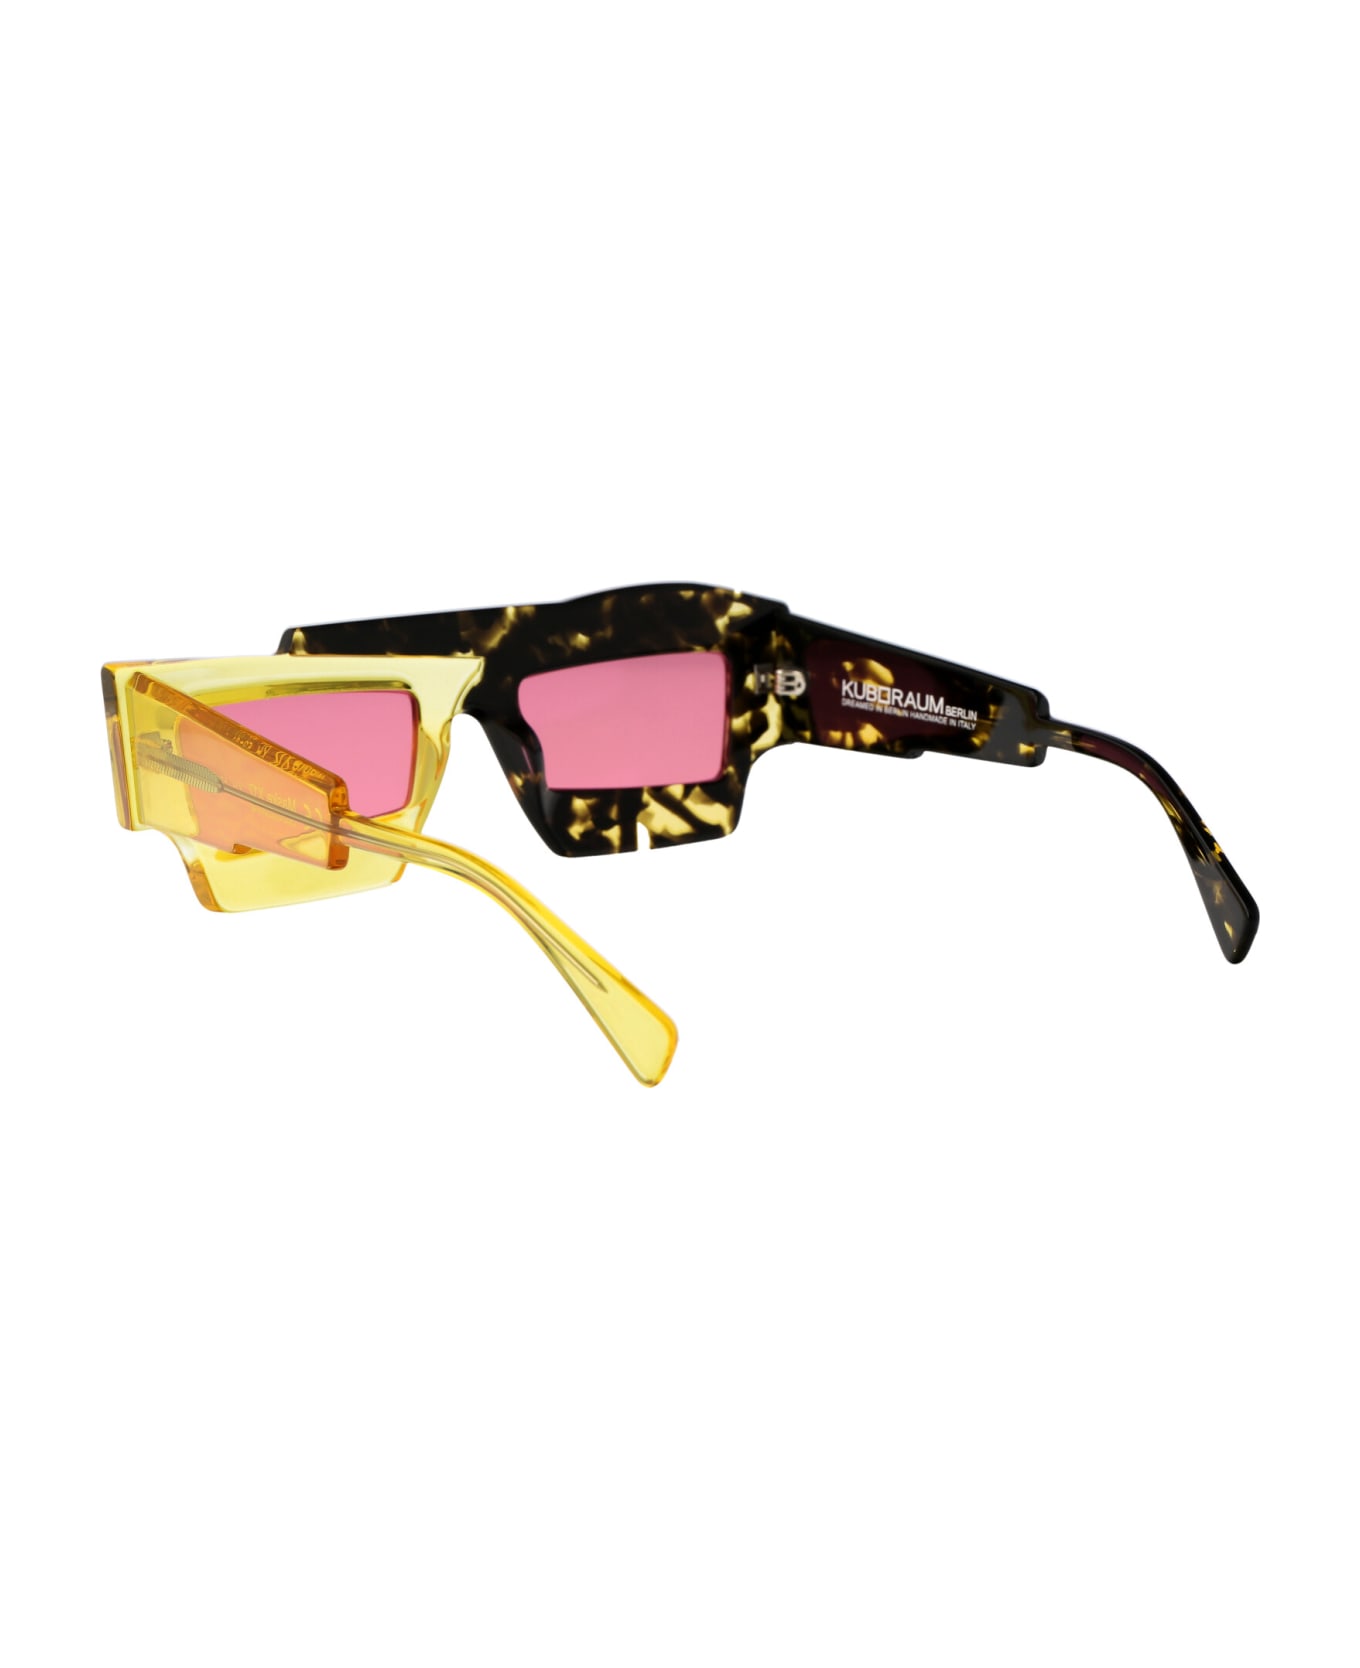 Kuboraum Maske X12 Sunglasses - YH pink1* サングラス